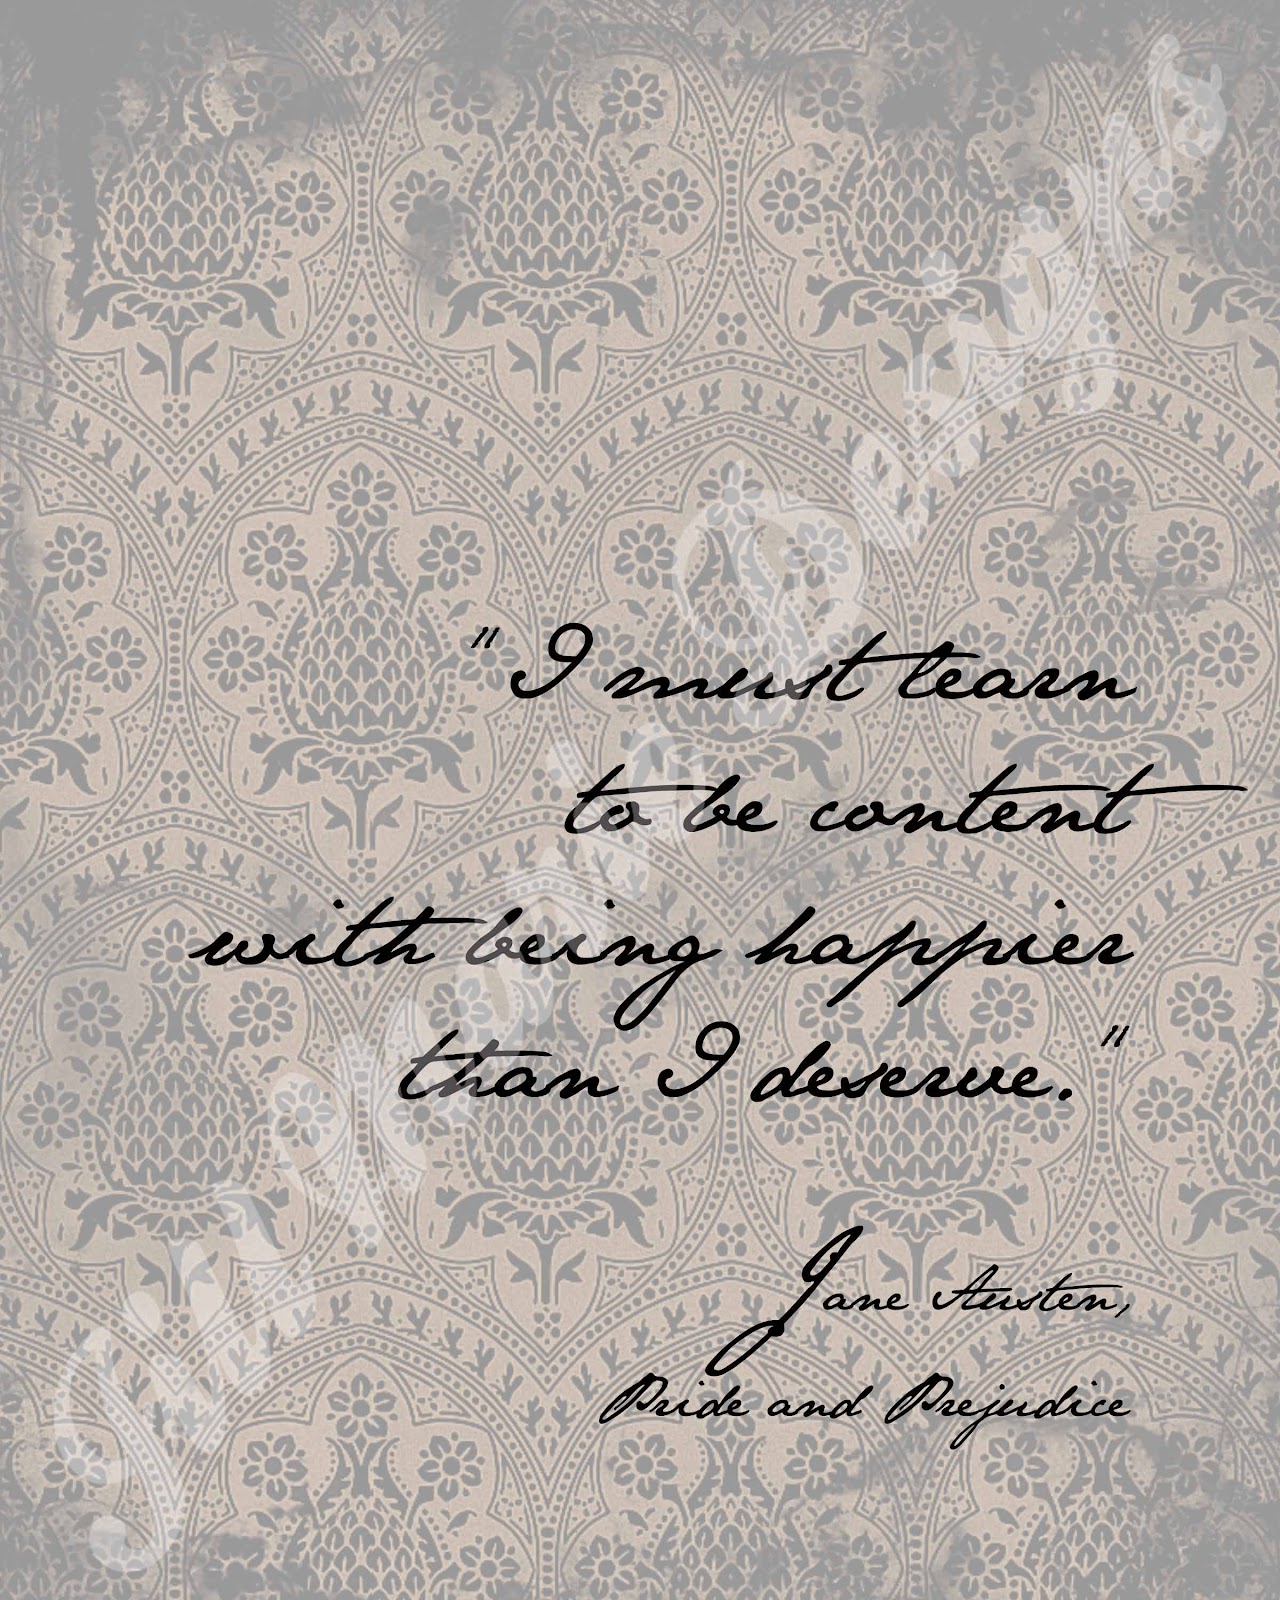 Jane Austen quote #2